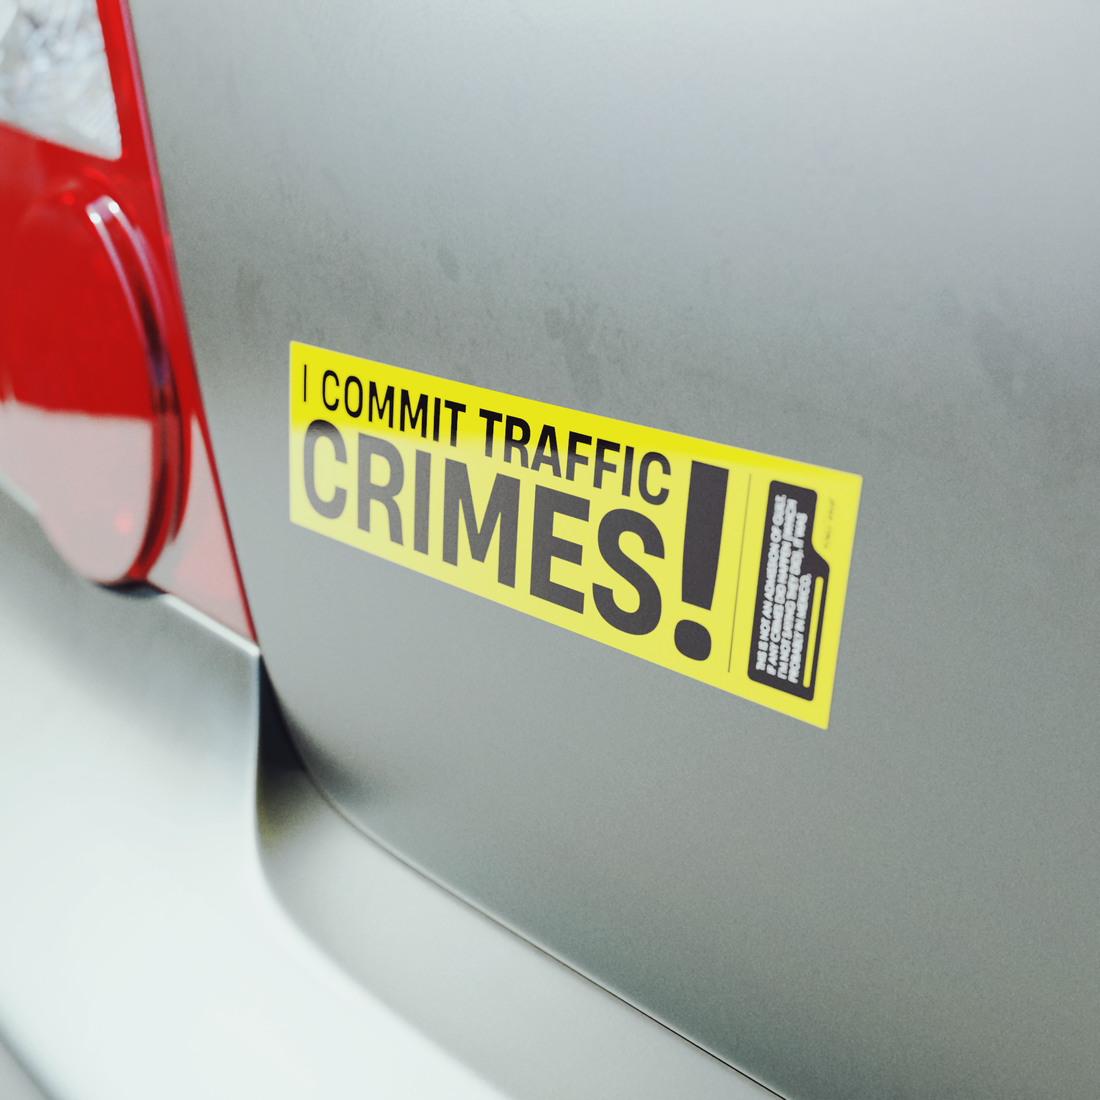 I commit traffic crimes sticker